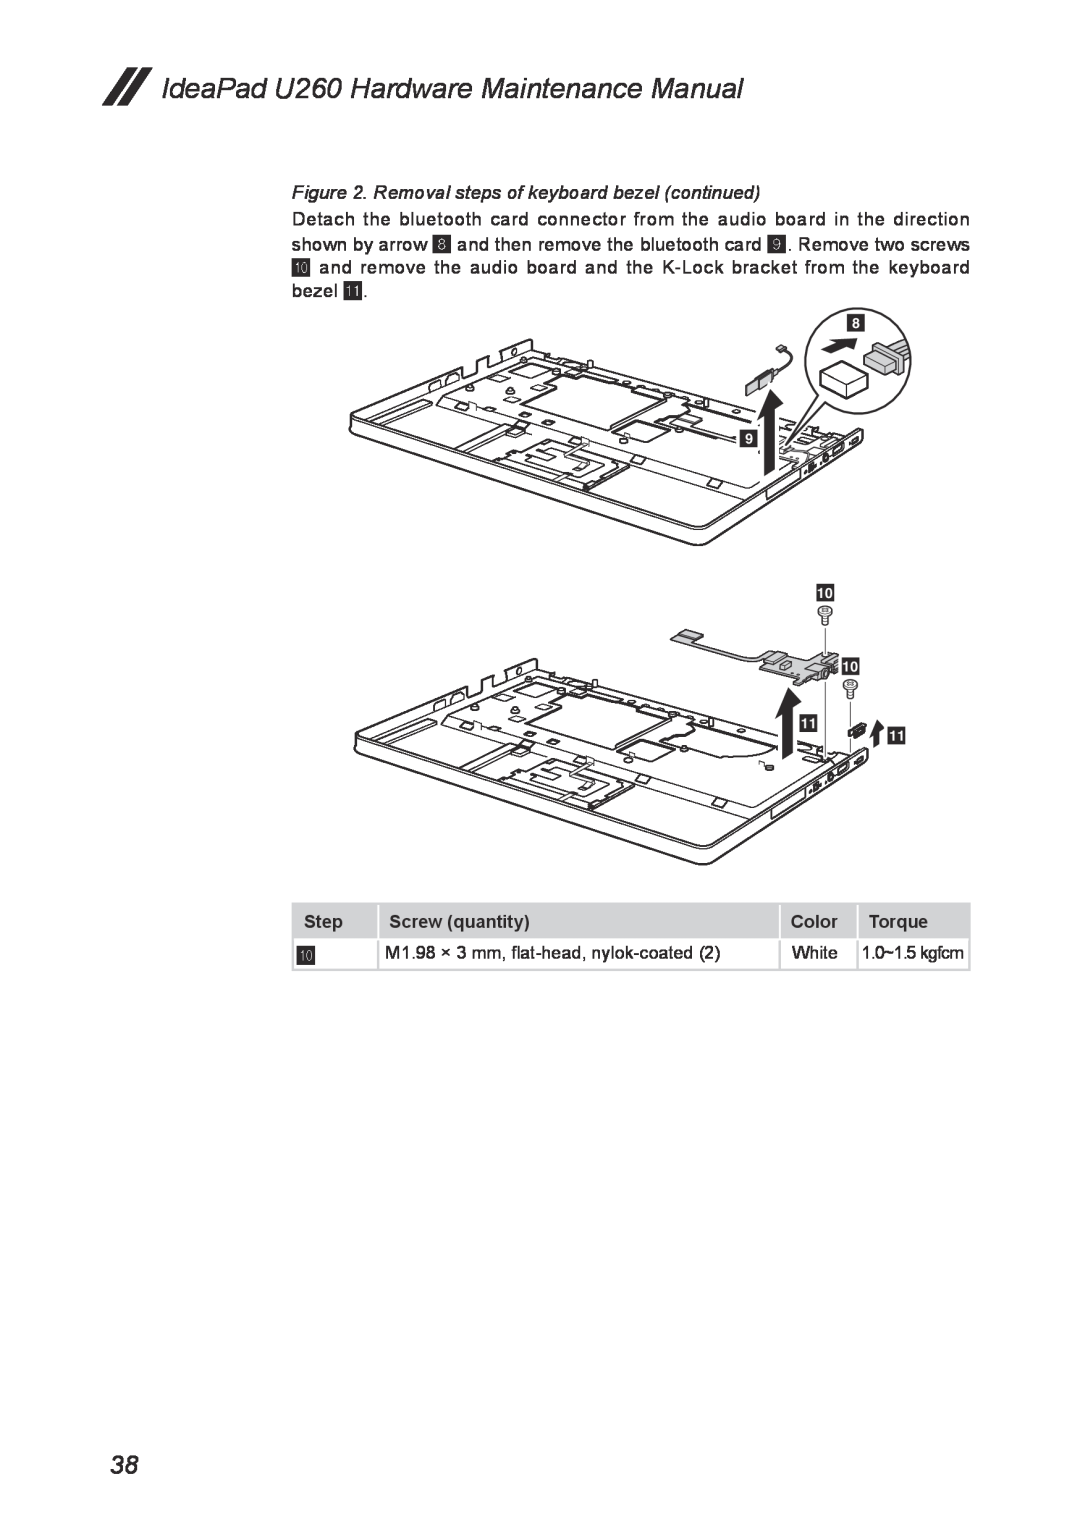 Lenovo manual IdeaPad U260 Hardware Maintenance Manual, Removal steps of keyboard bezel continued 